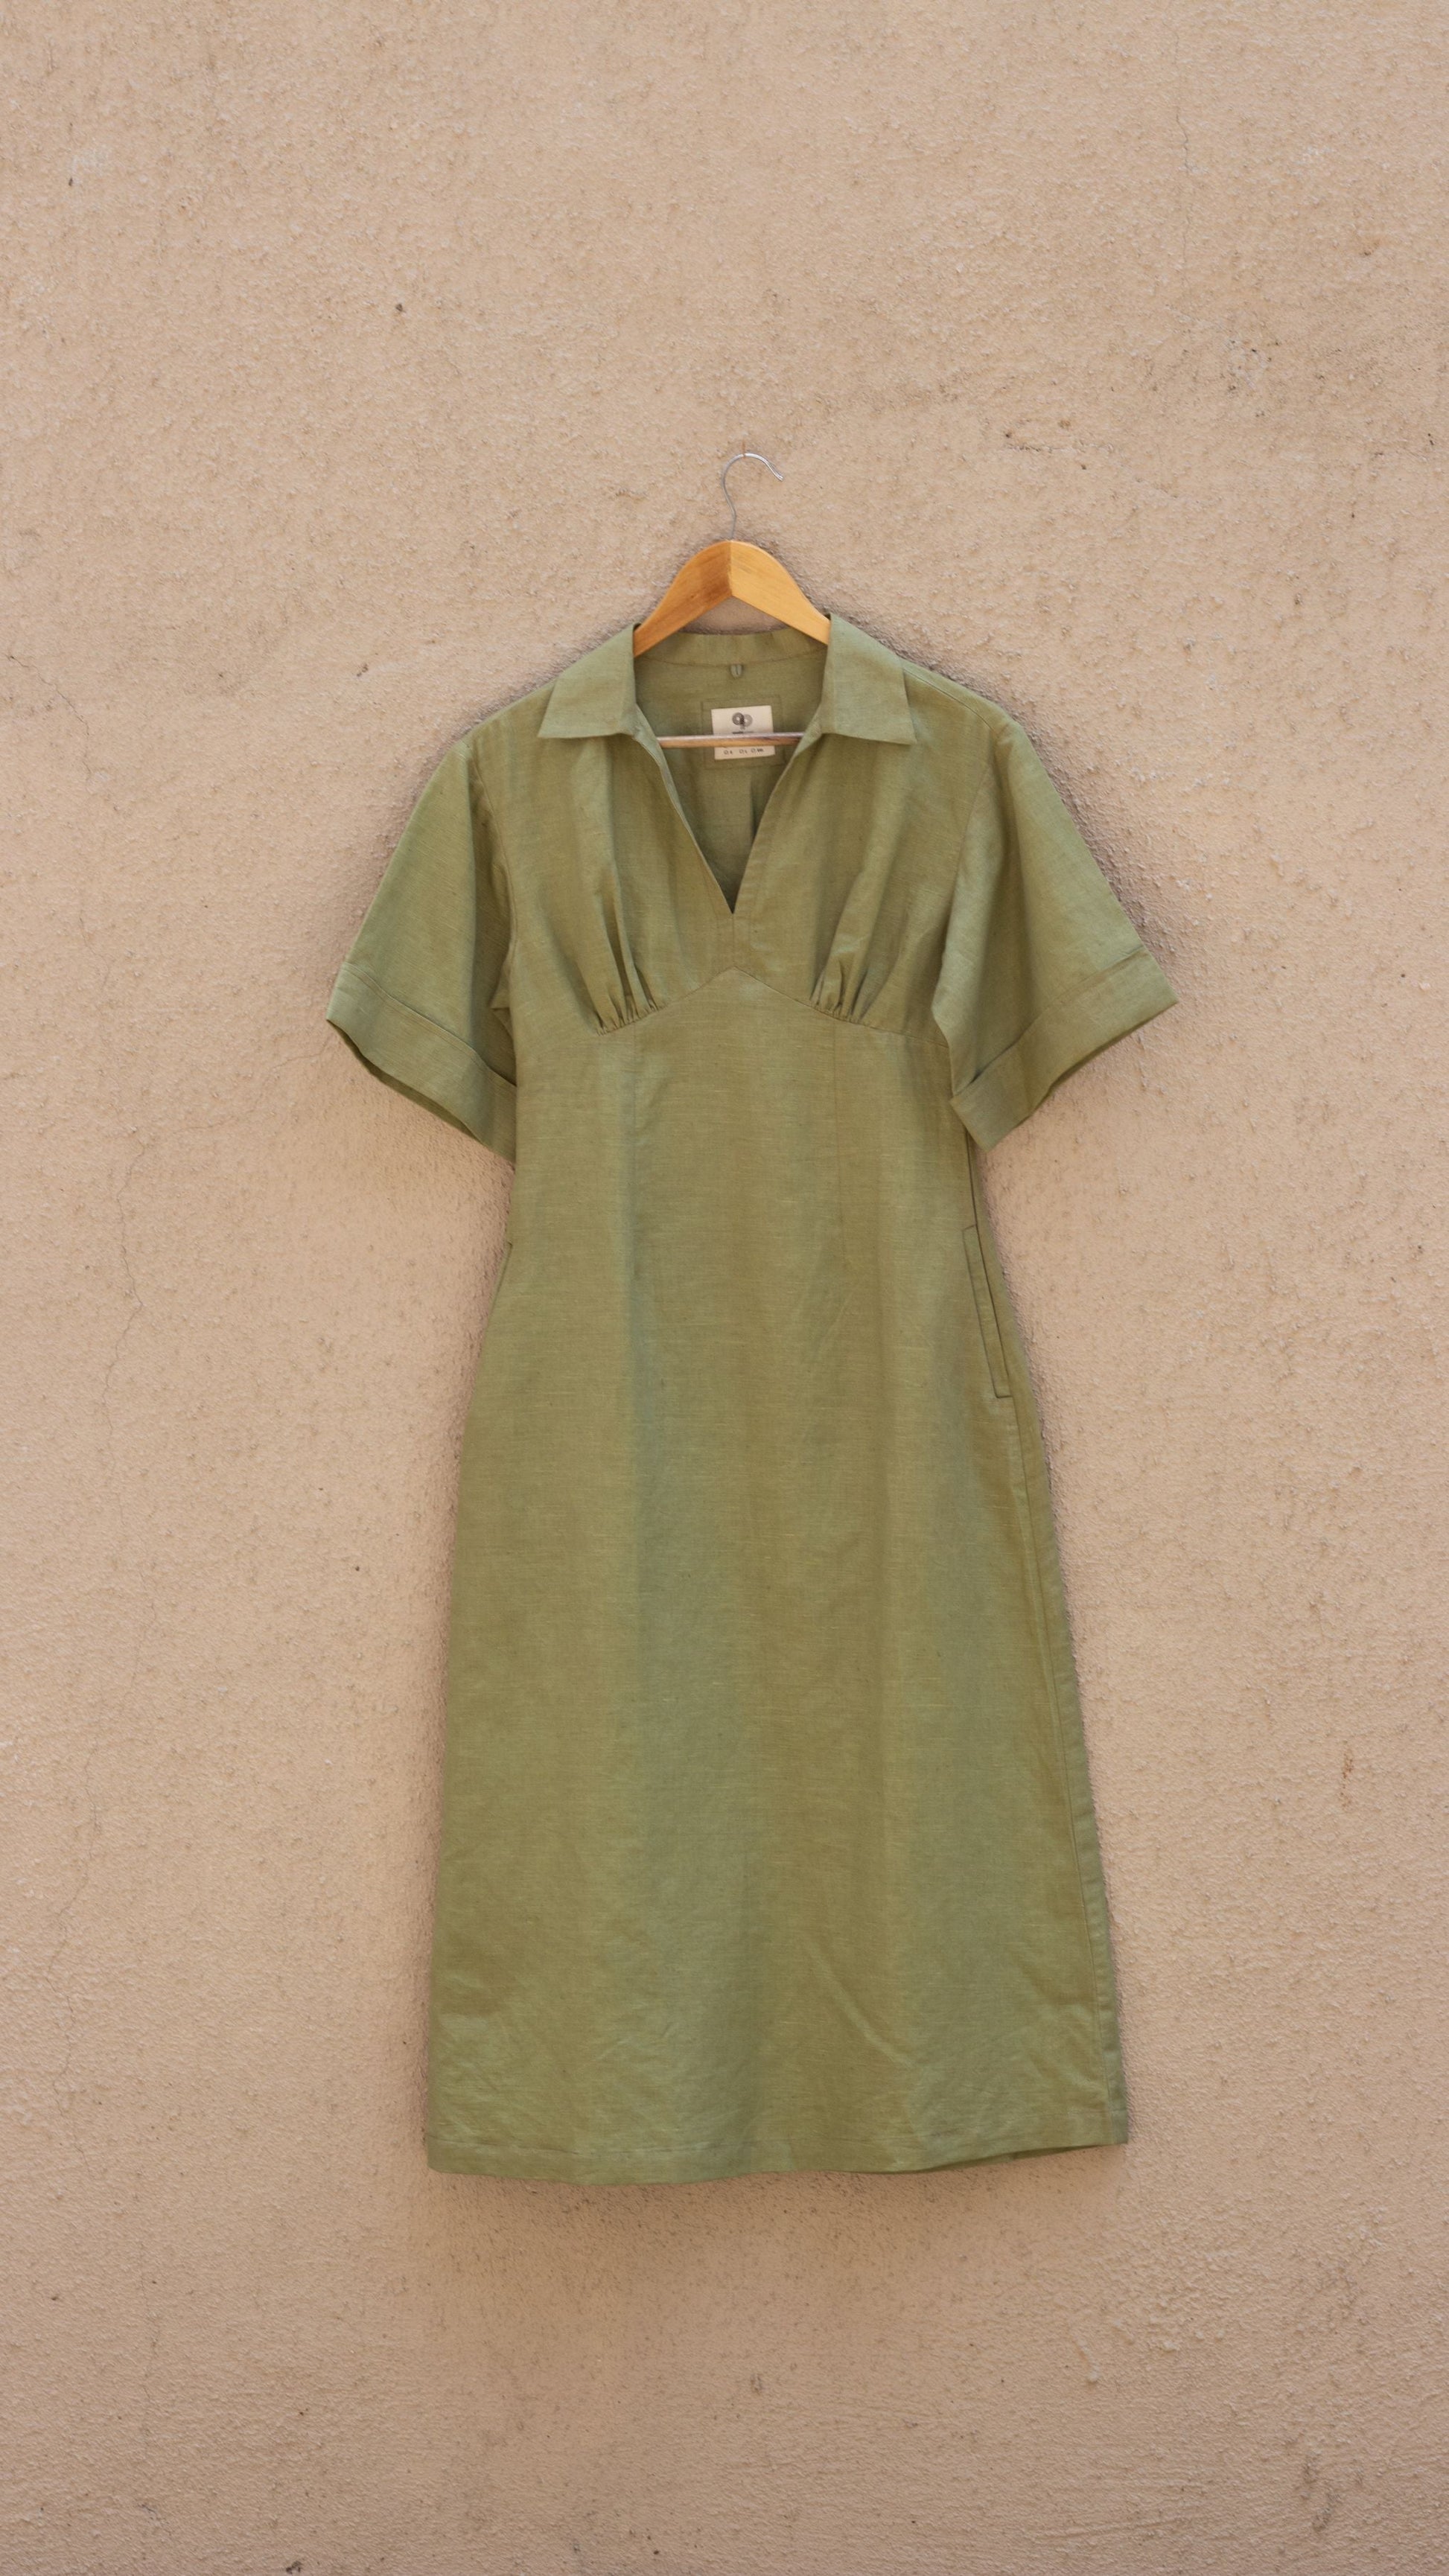 Green Midi Dress at Kamakhyaa by Anushé Pirani. This item is Casual Wear, Cotton, Cotton Hemp, Green, Handwoven, Hemp, Midi Dresses, Shibumi Collection, Shirt Dresses, Slim Fit, Solids, Womenswear